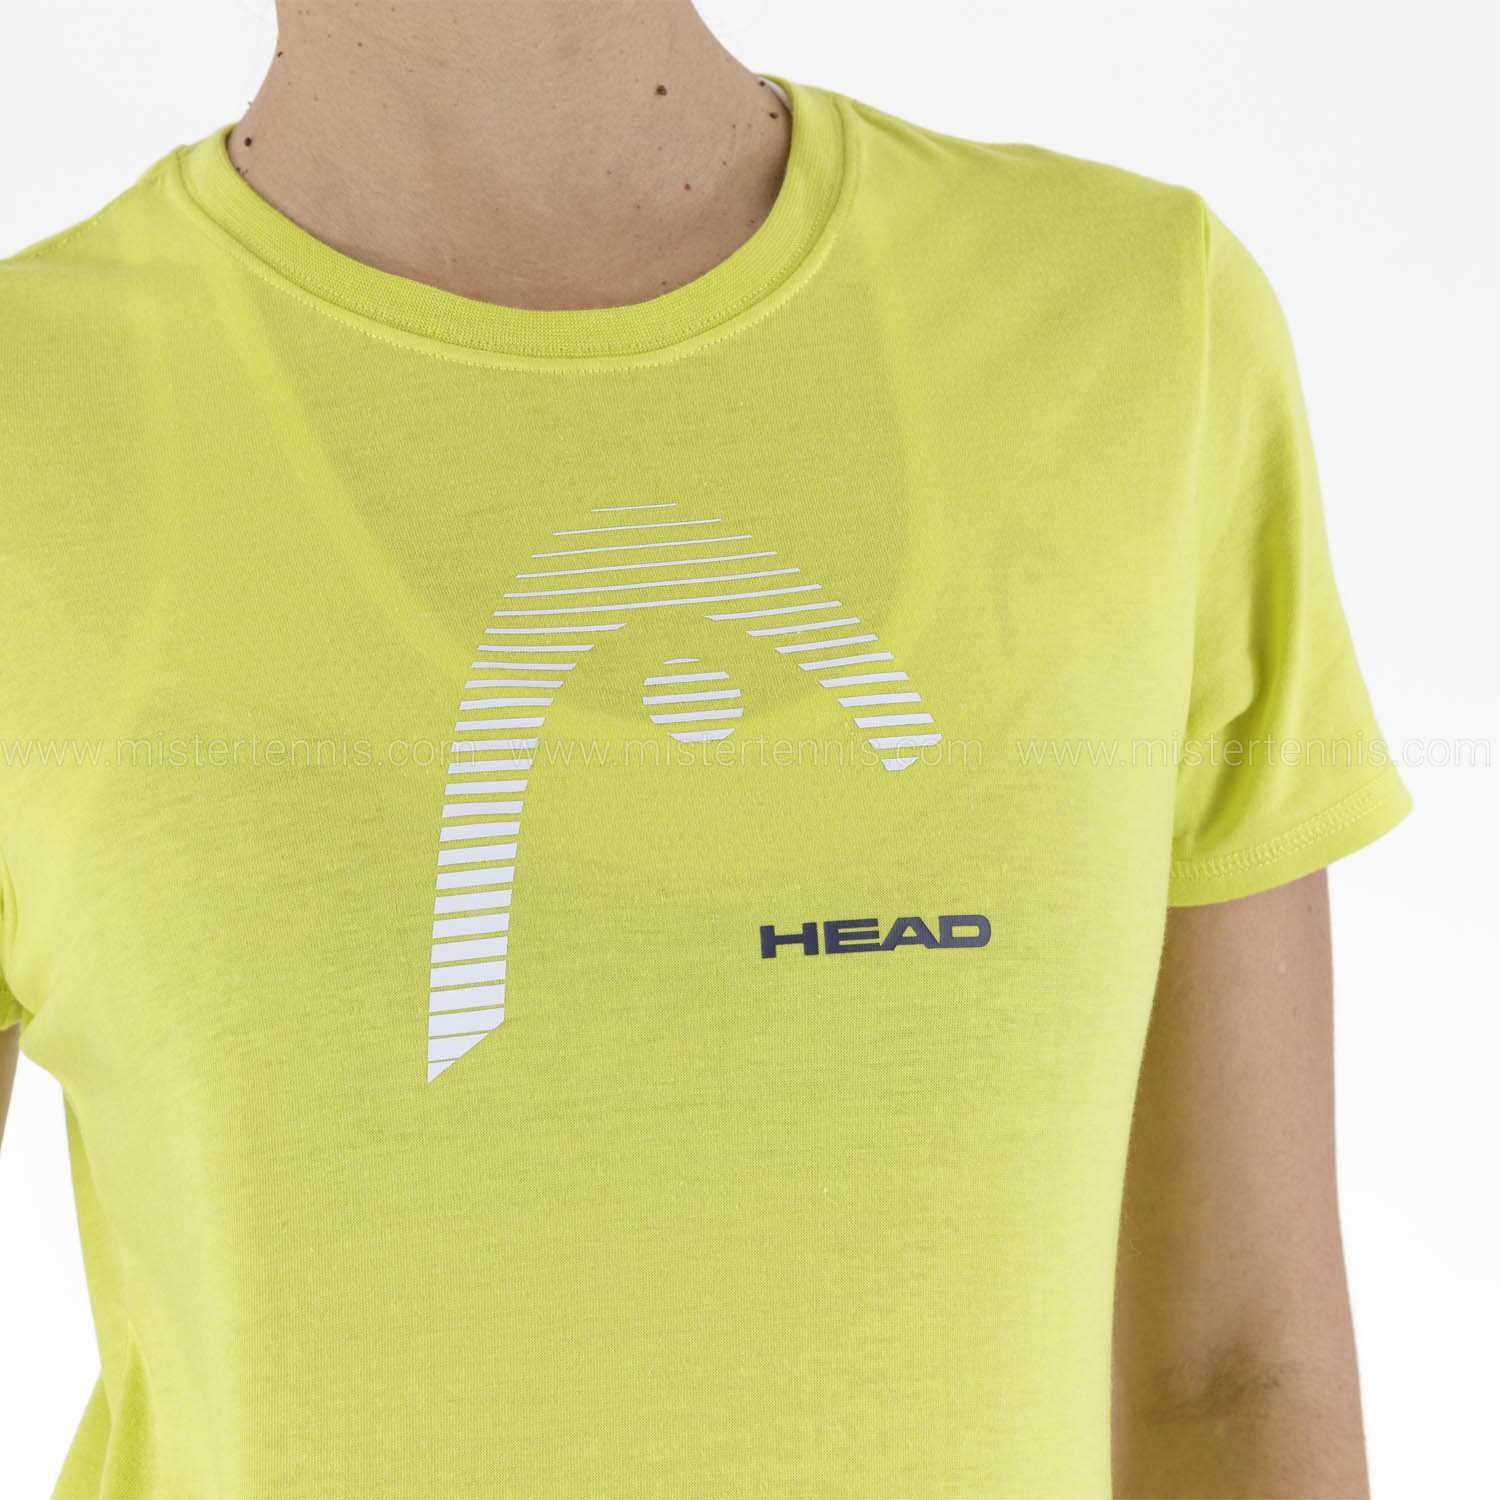 Head Club Lara T-Shirt - Yellow